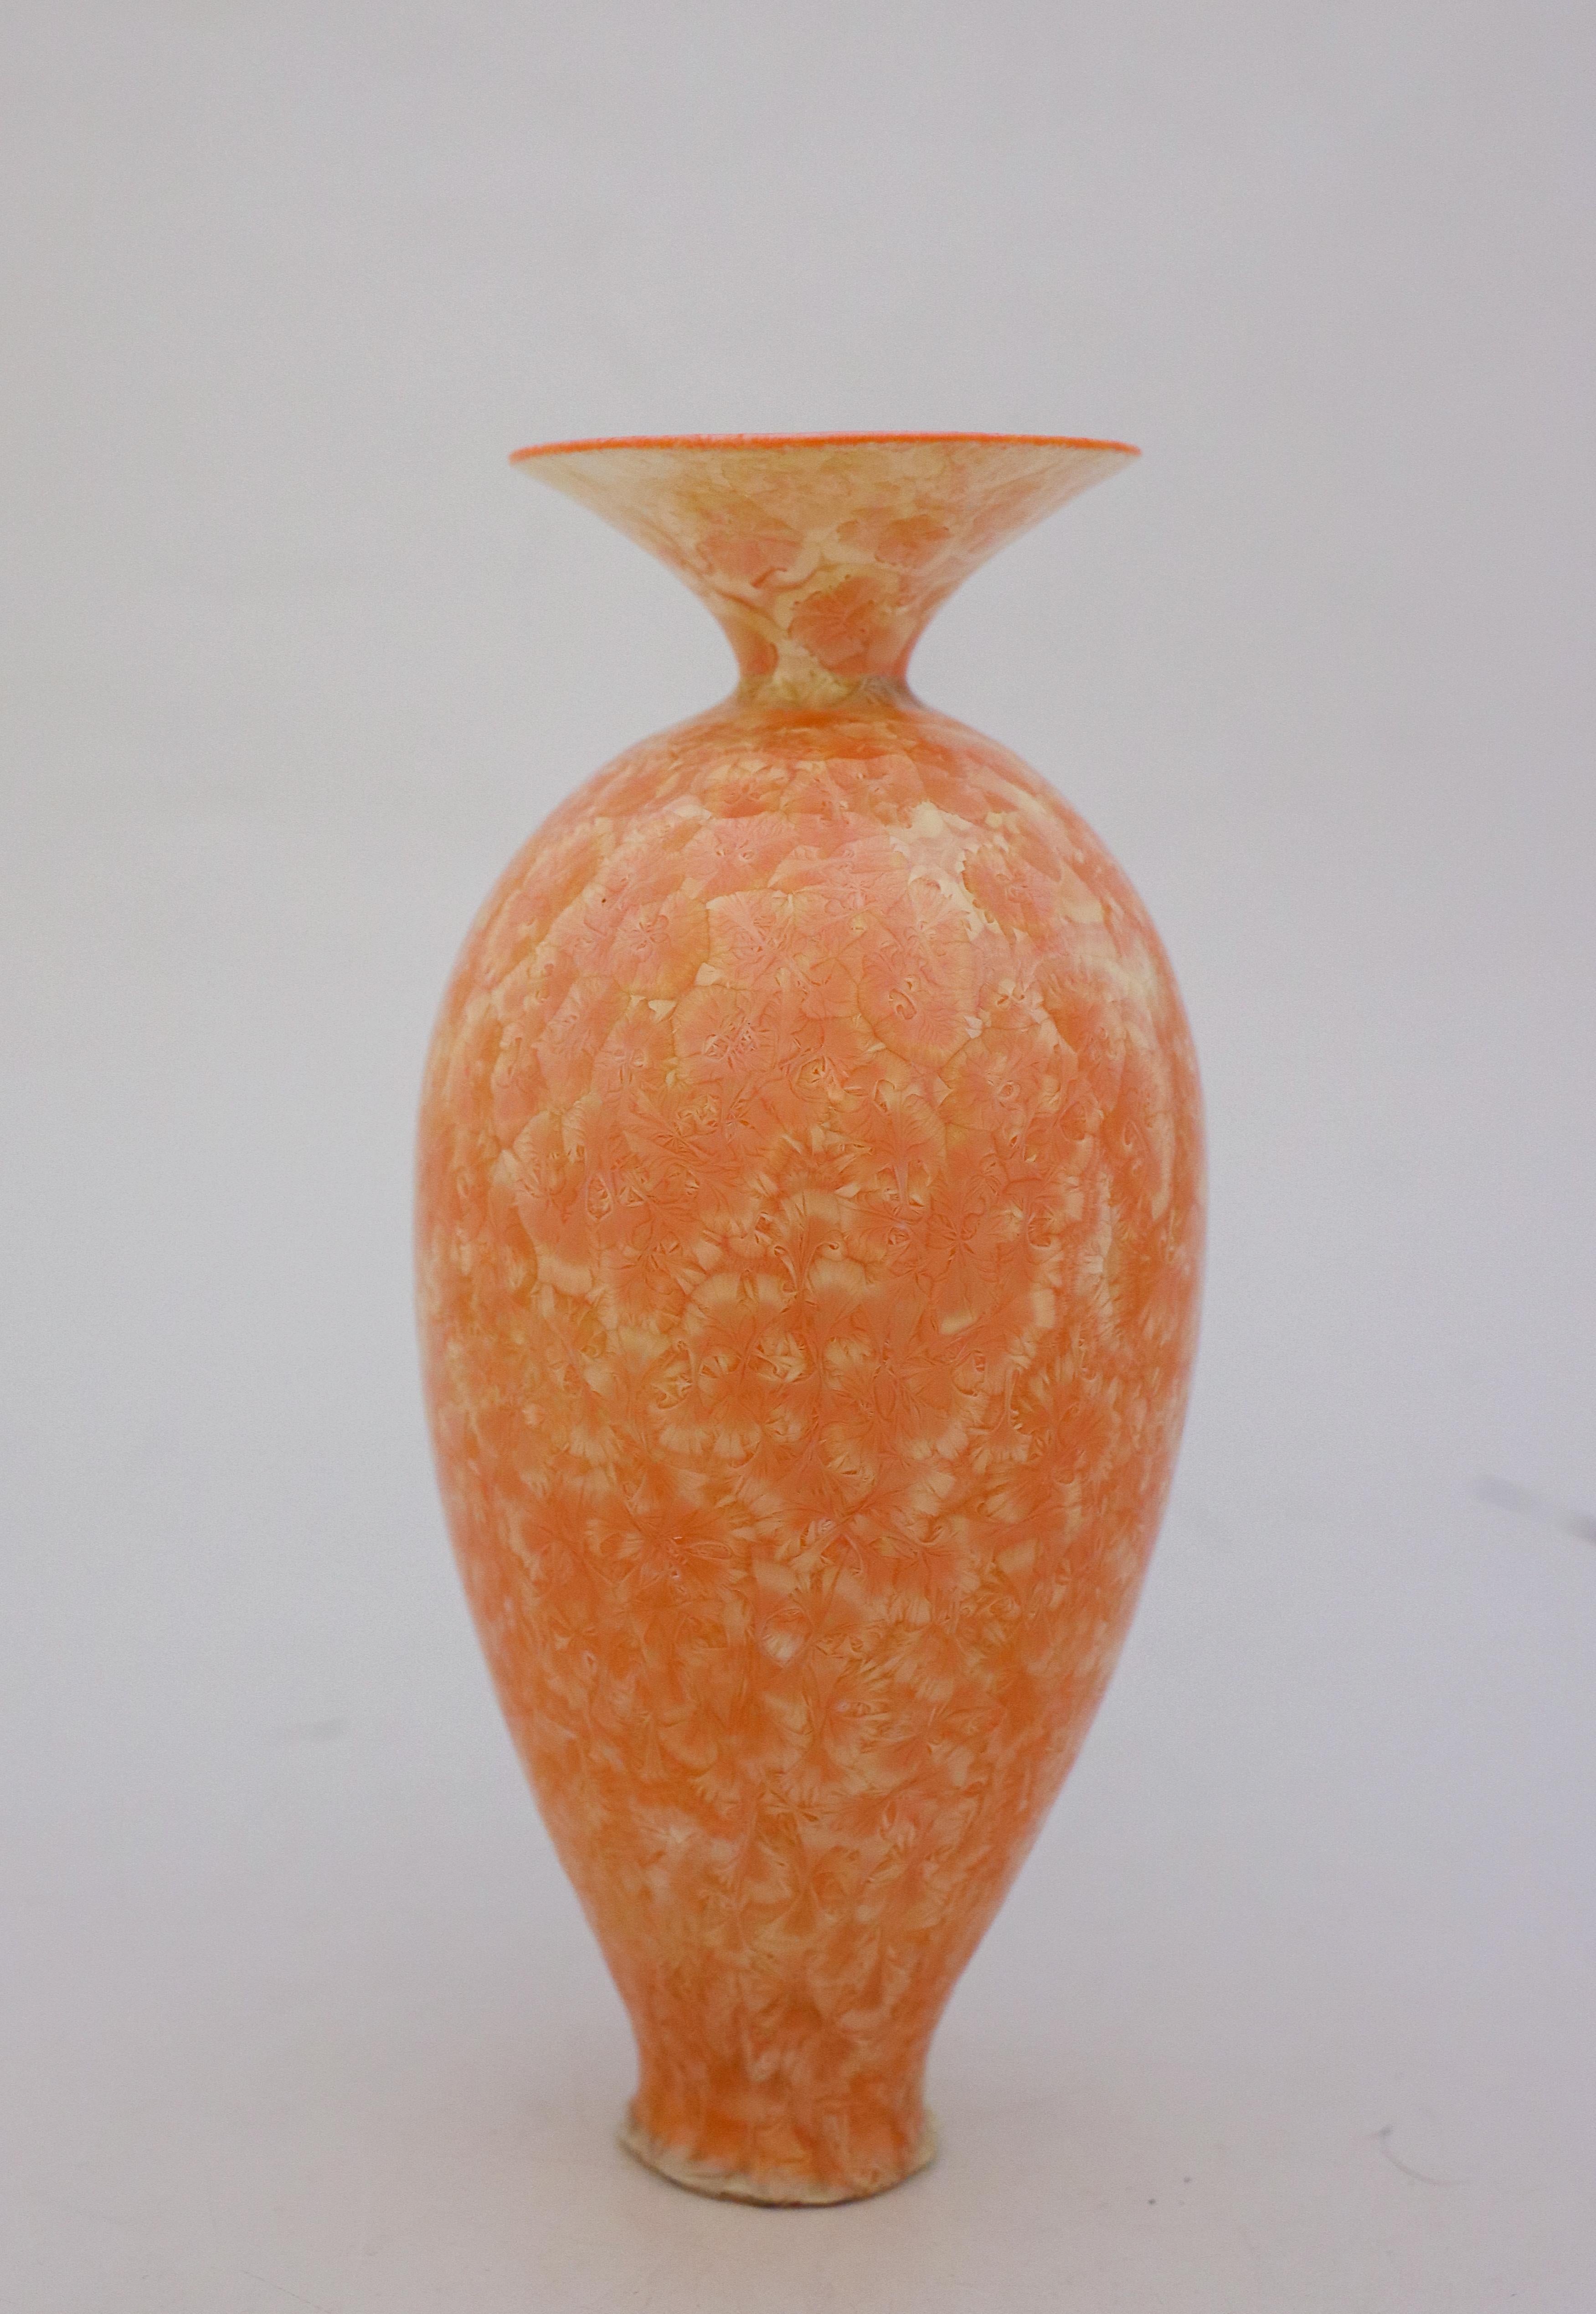 Glazed Vase with Apricot Crystalline Glaze Isak Isaksson Contemporary Sweden Ceramic